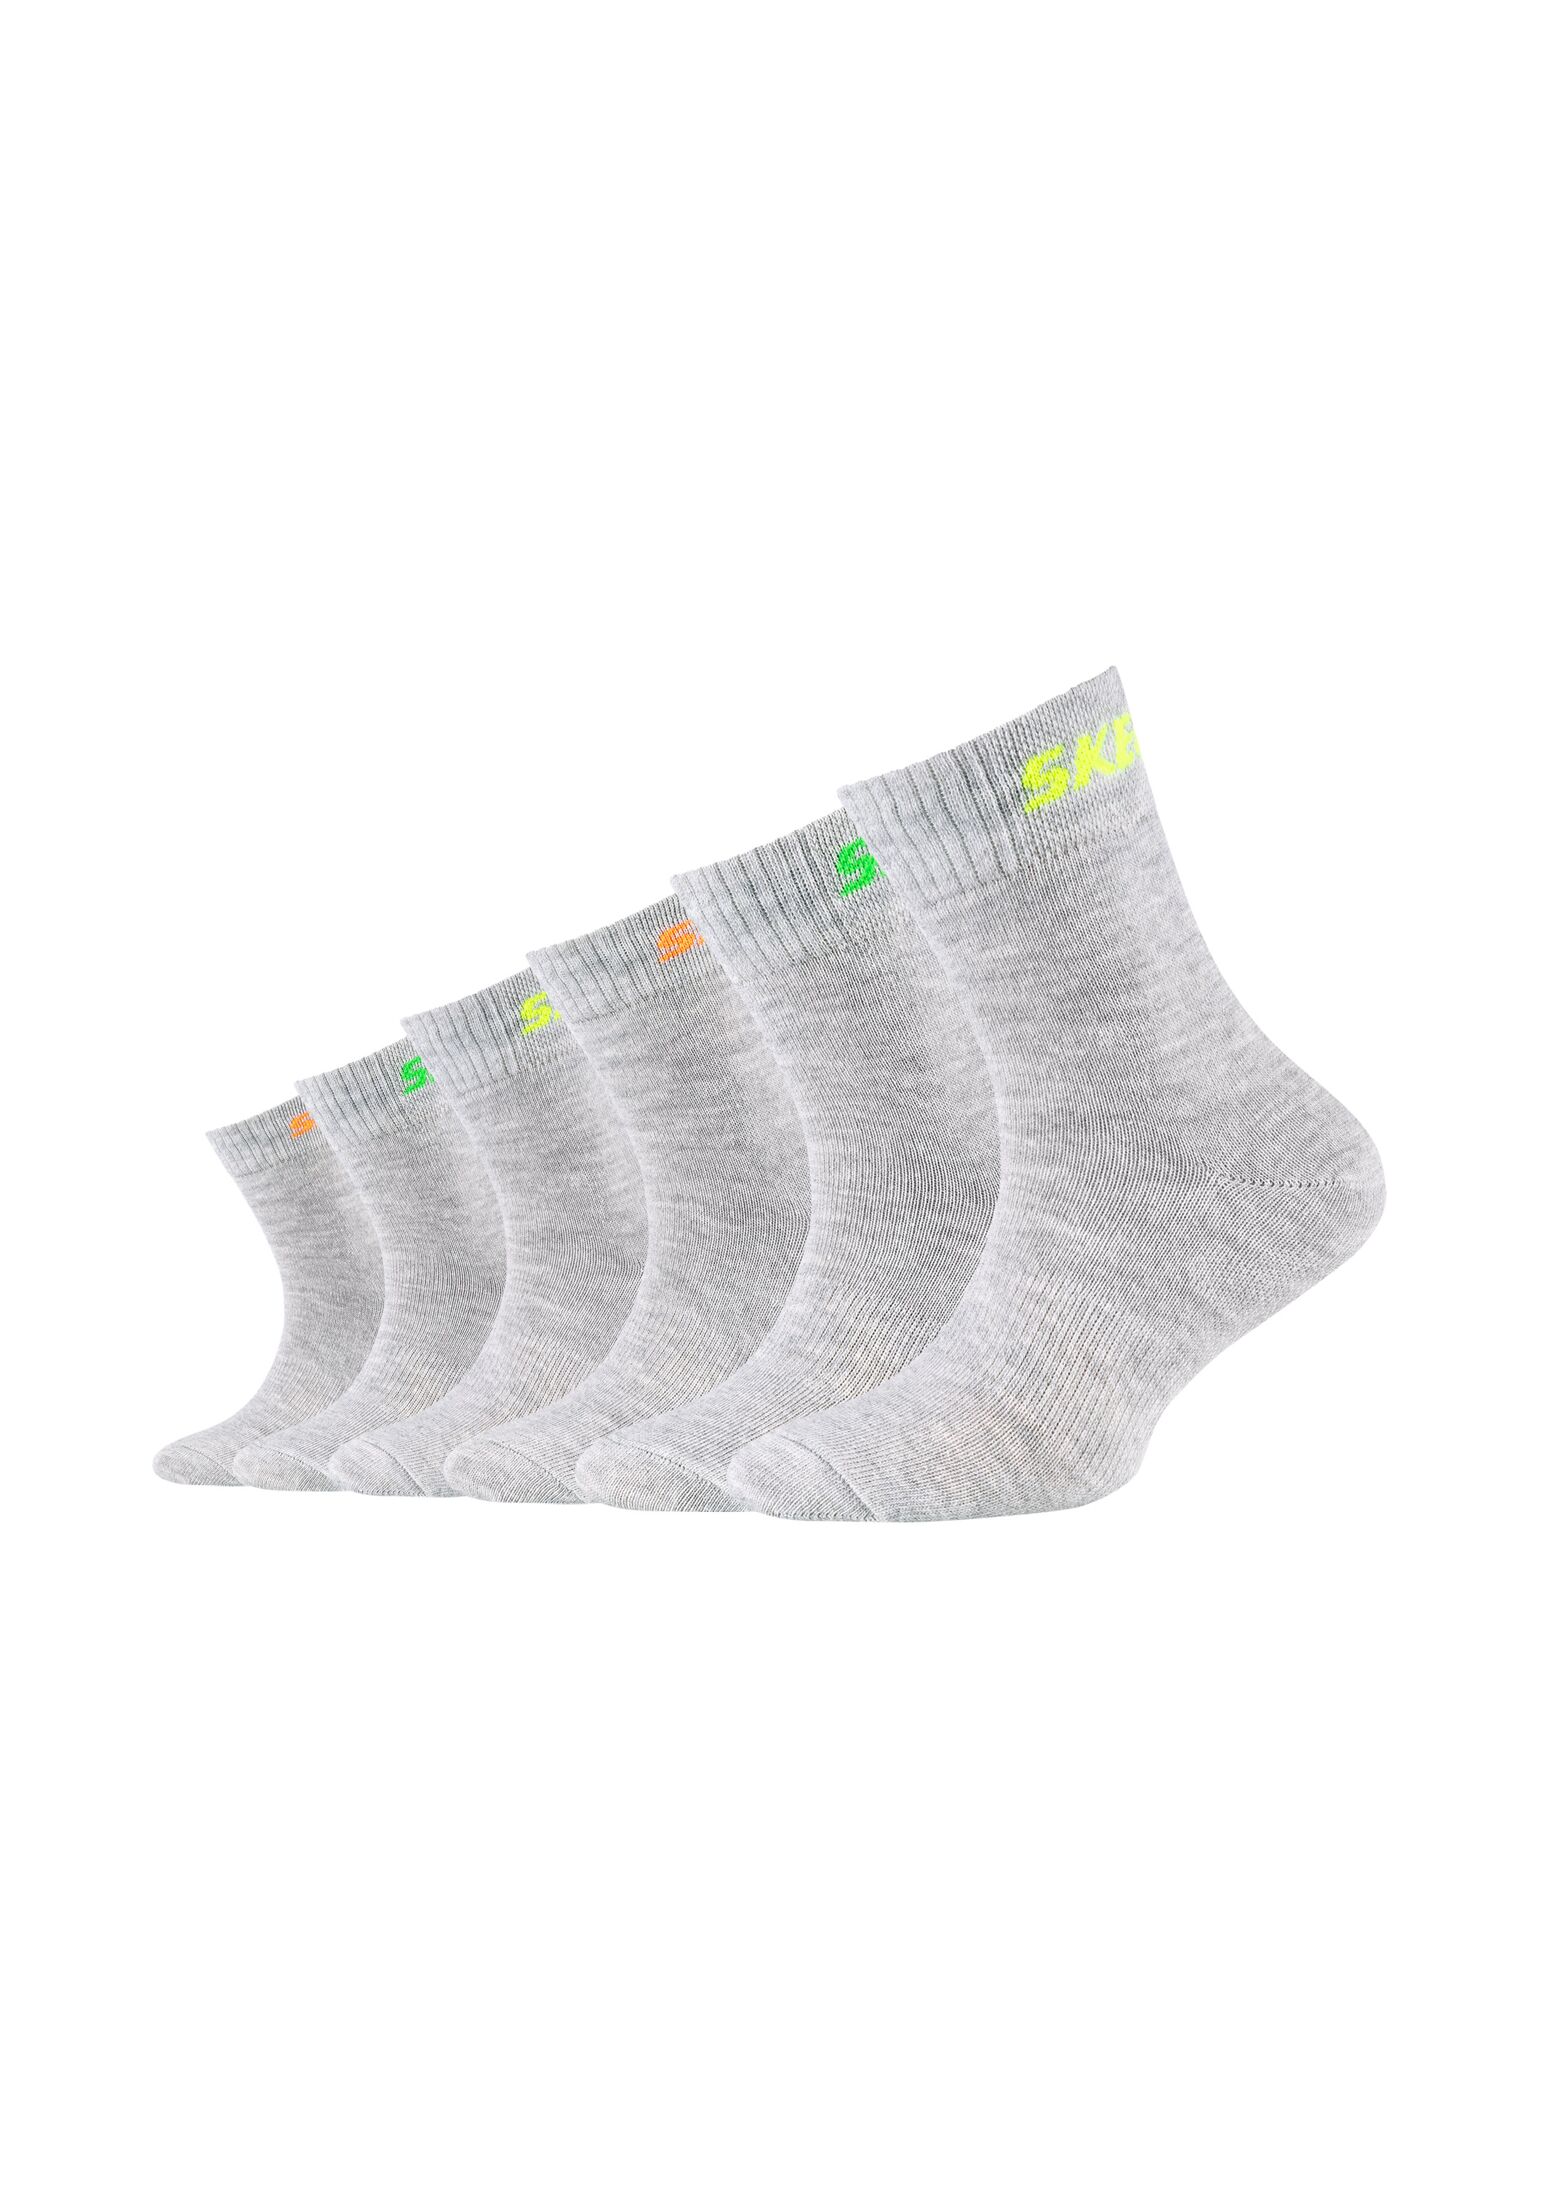 Носки Skechers 6 шт mesh ventilation, цвет fog melange